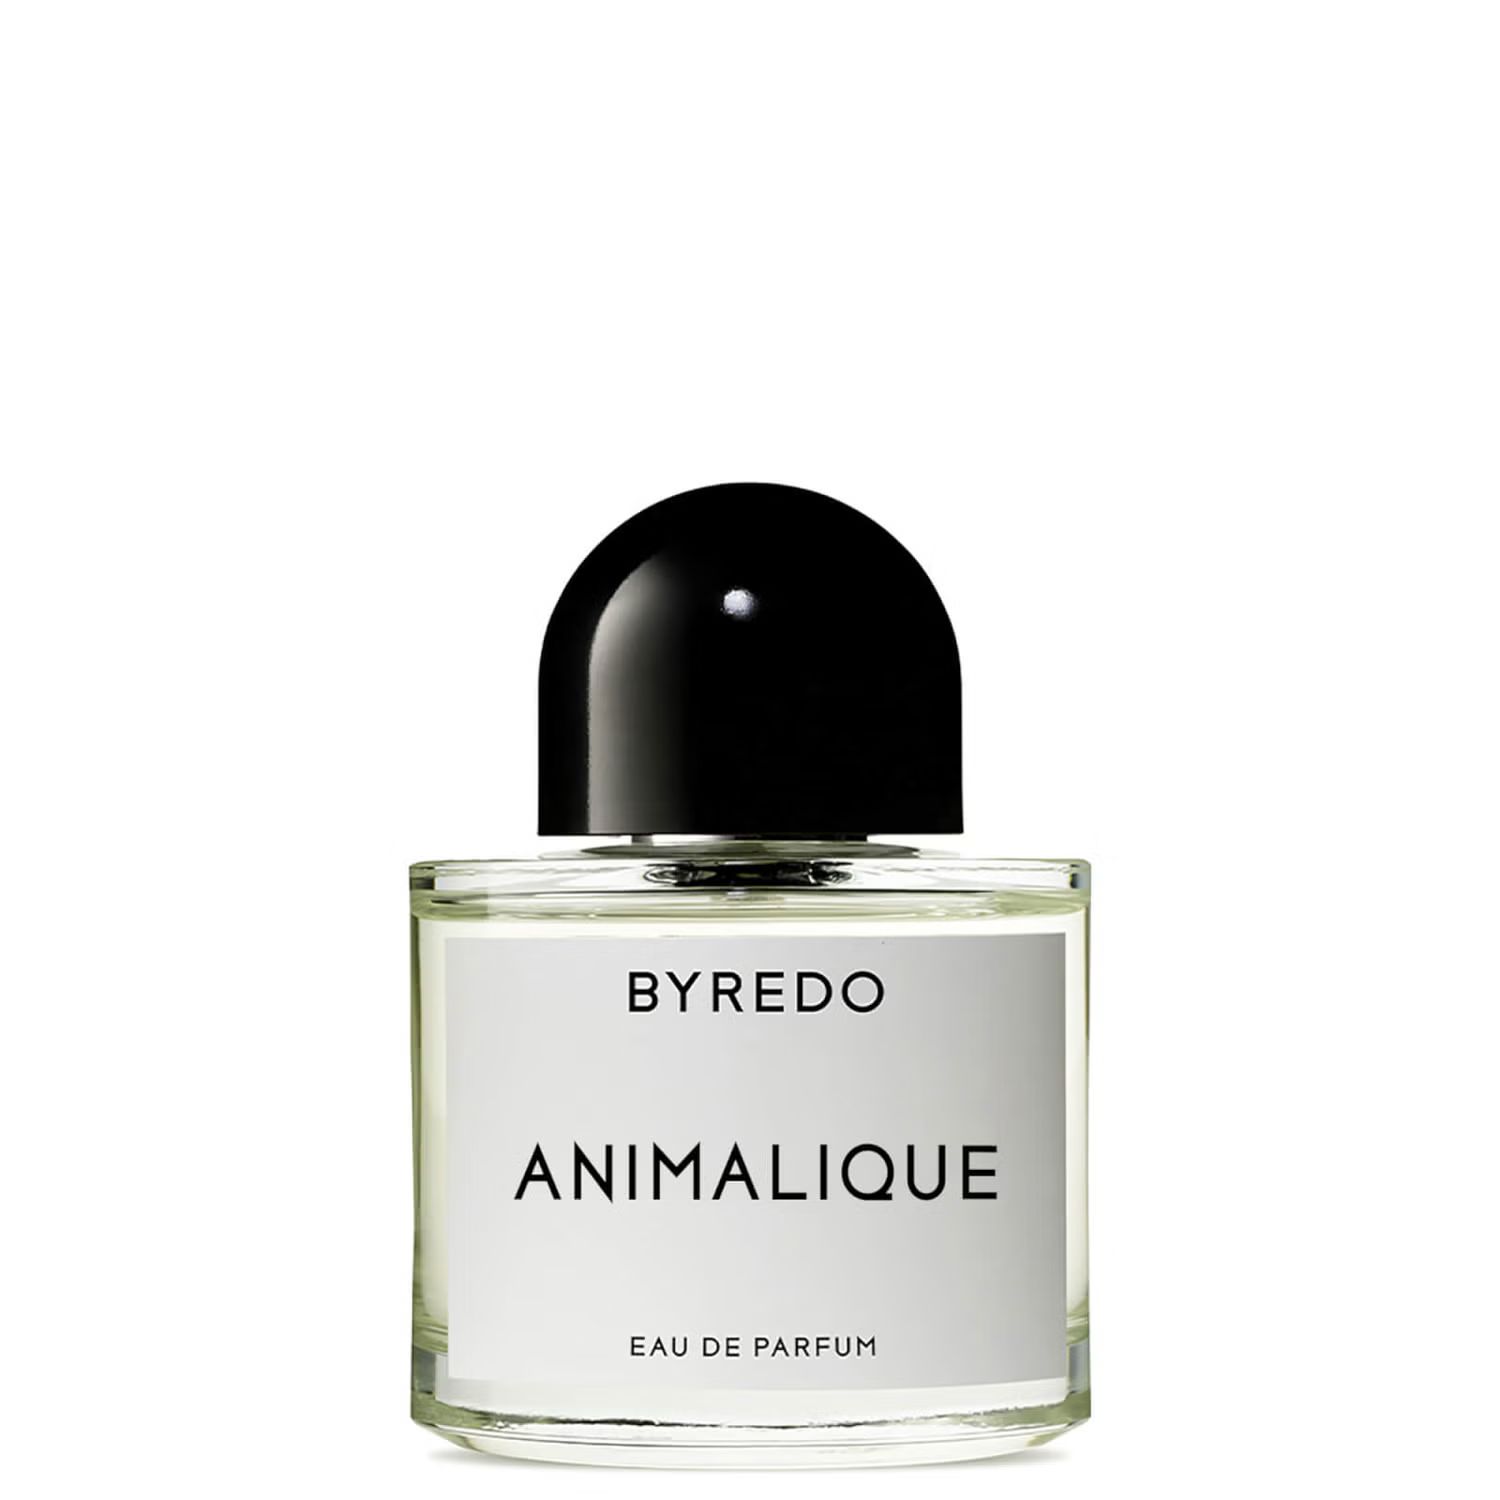 BYREDO Animalique Eau de Parfum 50ml | Cult Beauty